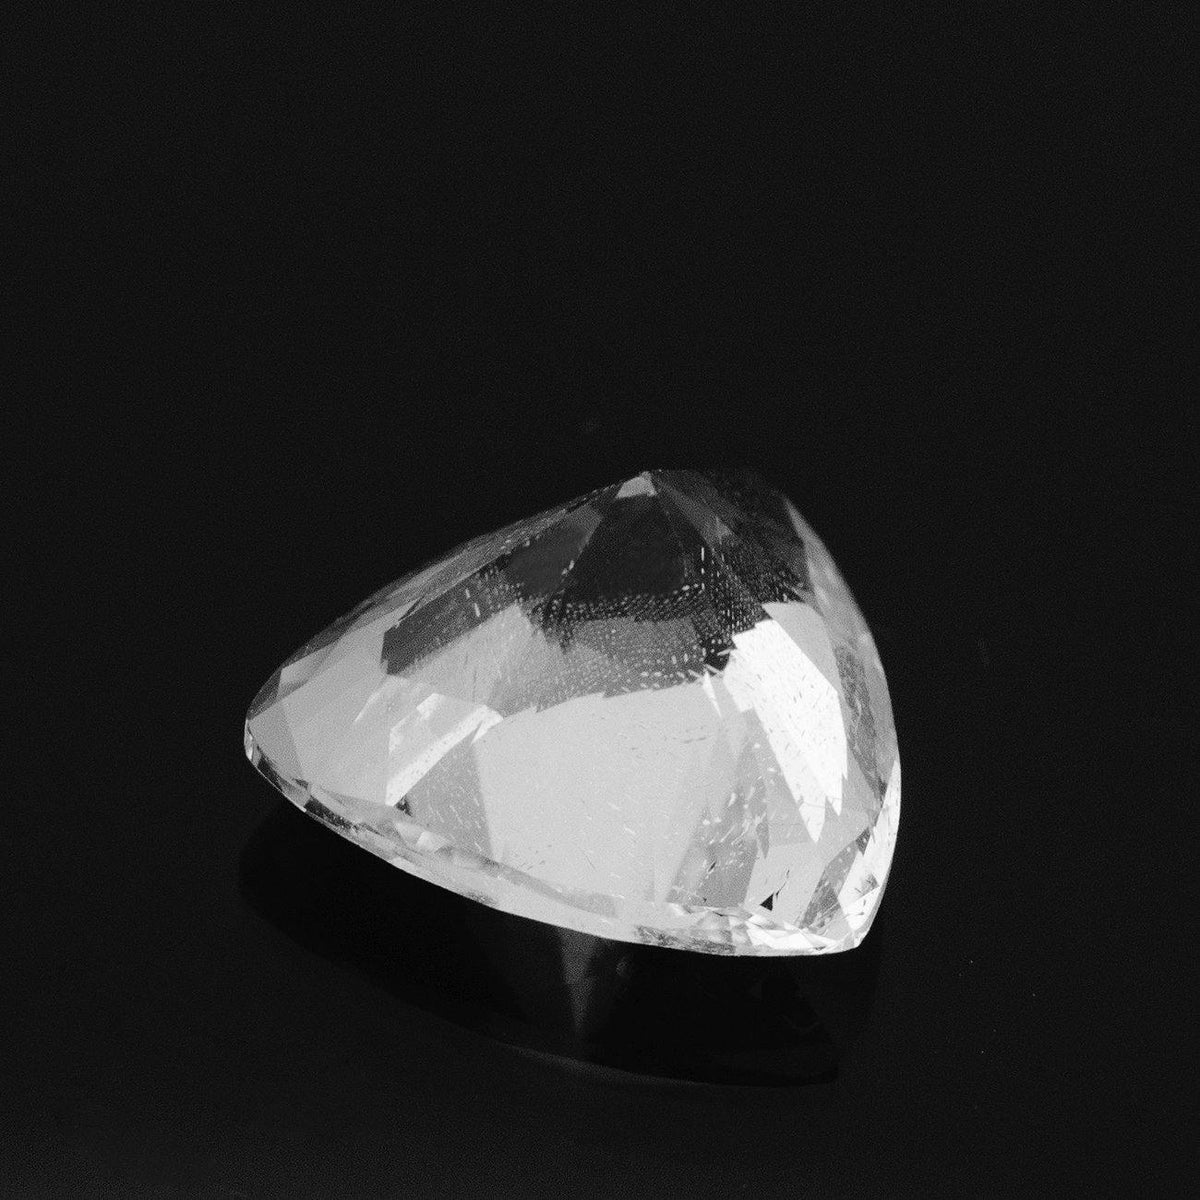 Amazing 3.23 Carats Trillion Shape Natural Danburite Loose Gemstone - Modern Gem Jewelry 